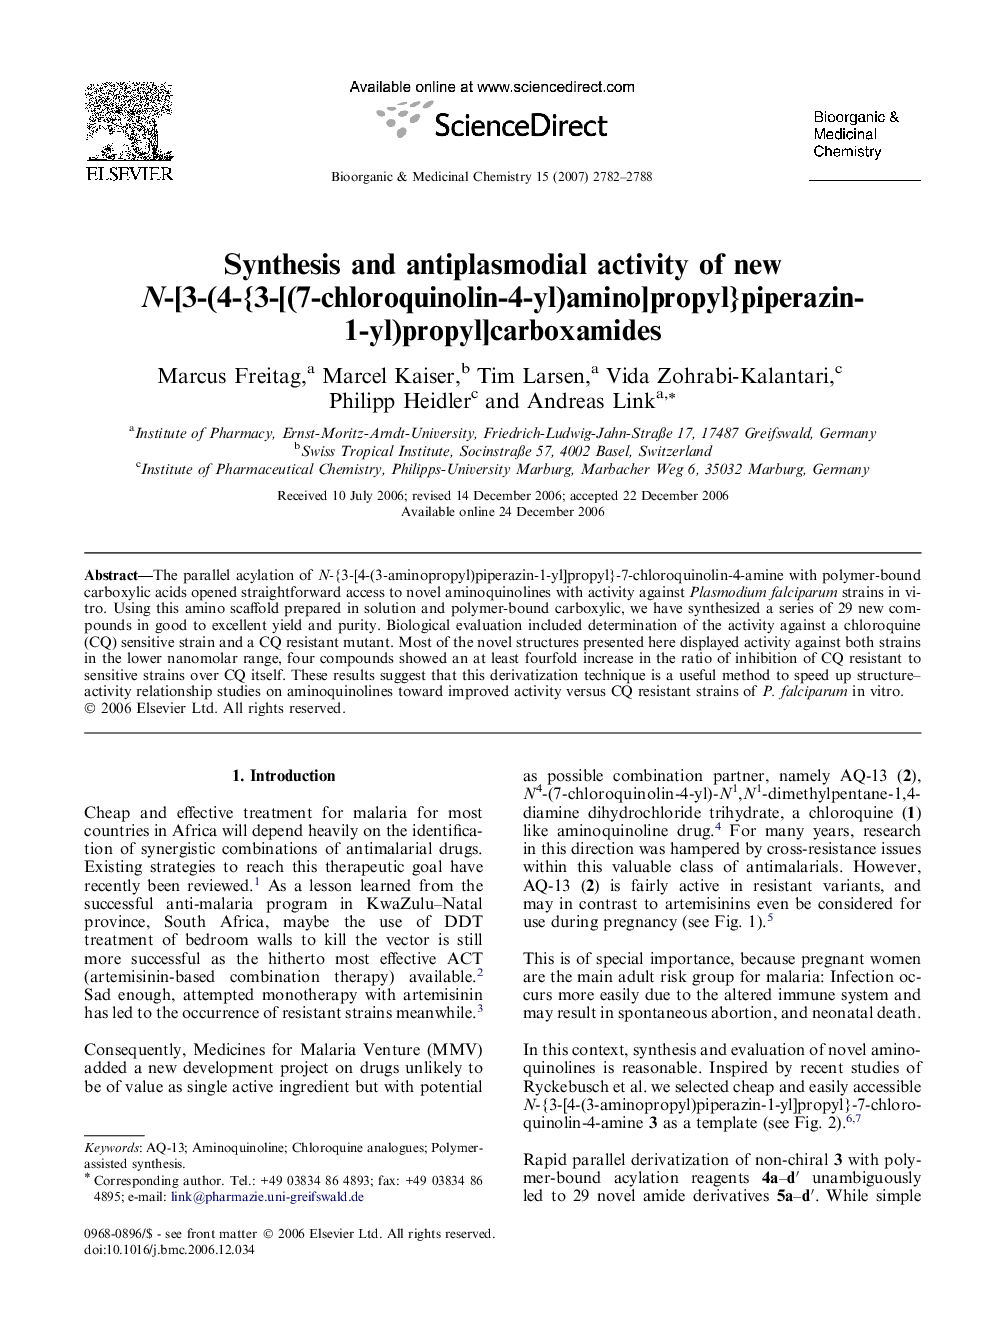 Synthesis and antiplasmodial activity of new N-[3-(4-{3-[(7-chloroquinolin-4-yl)amino]propyl}piperazin-1-yl)propyl]carboxamides